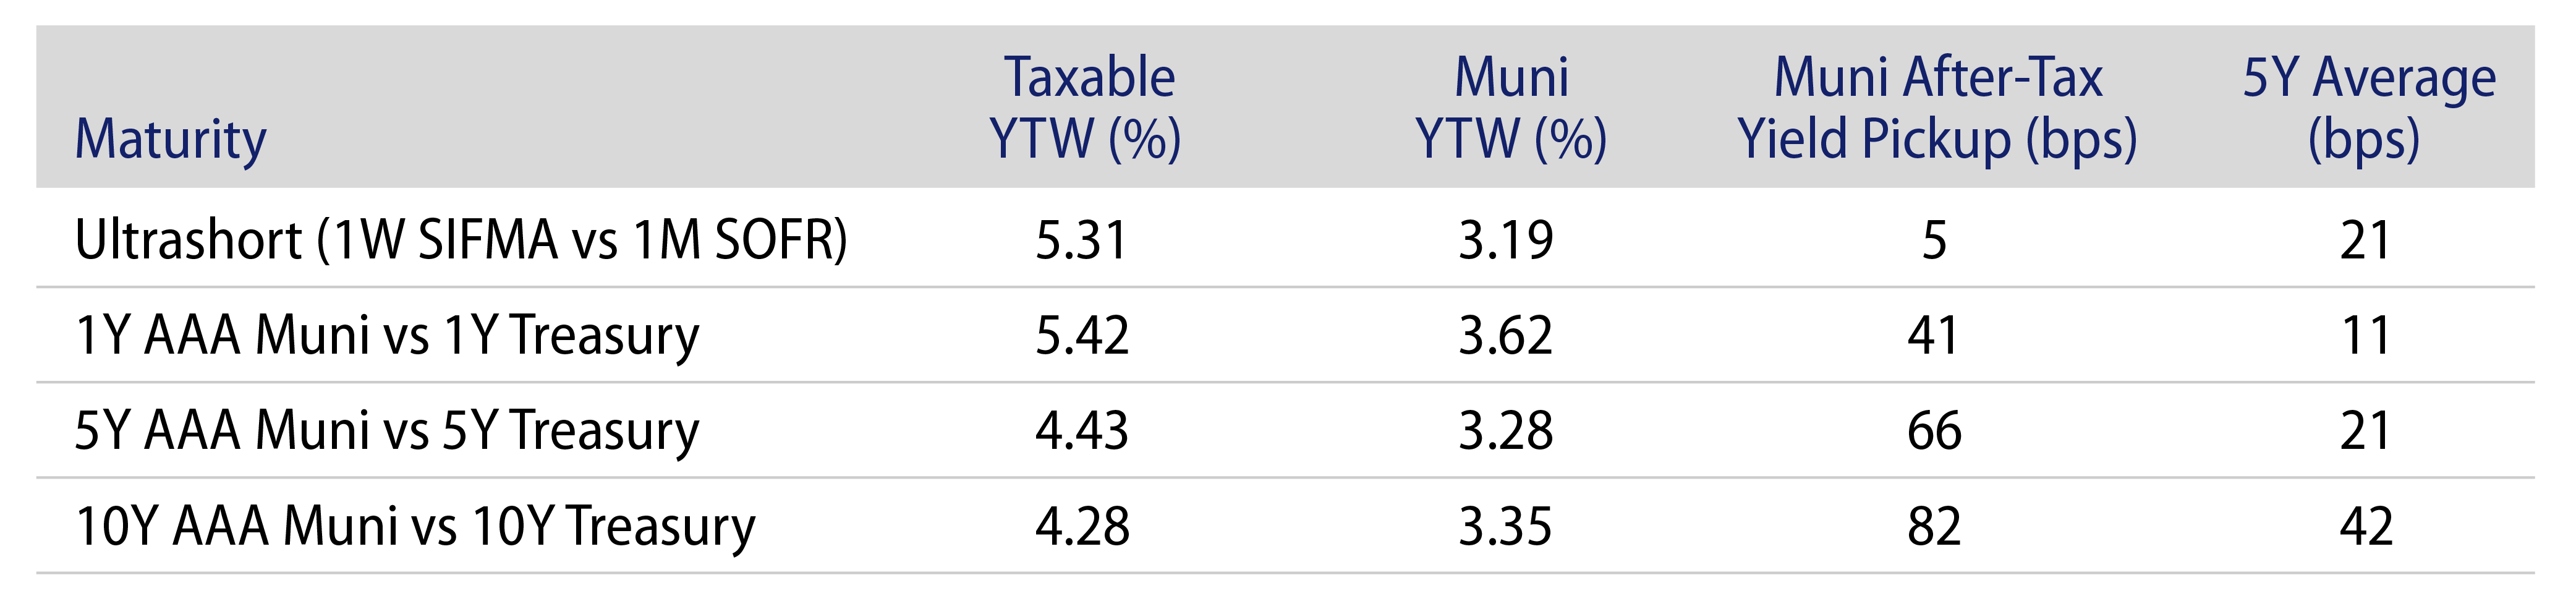 Explore Muni After-Tax Yield Pickup